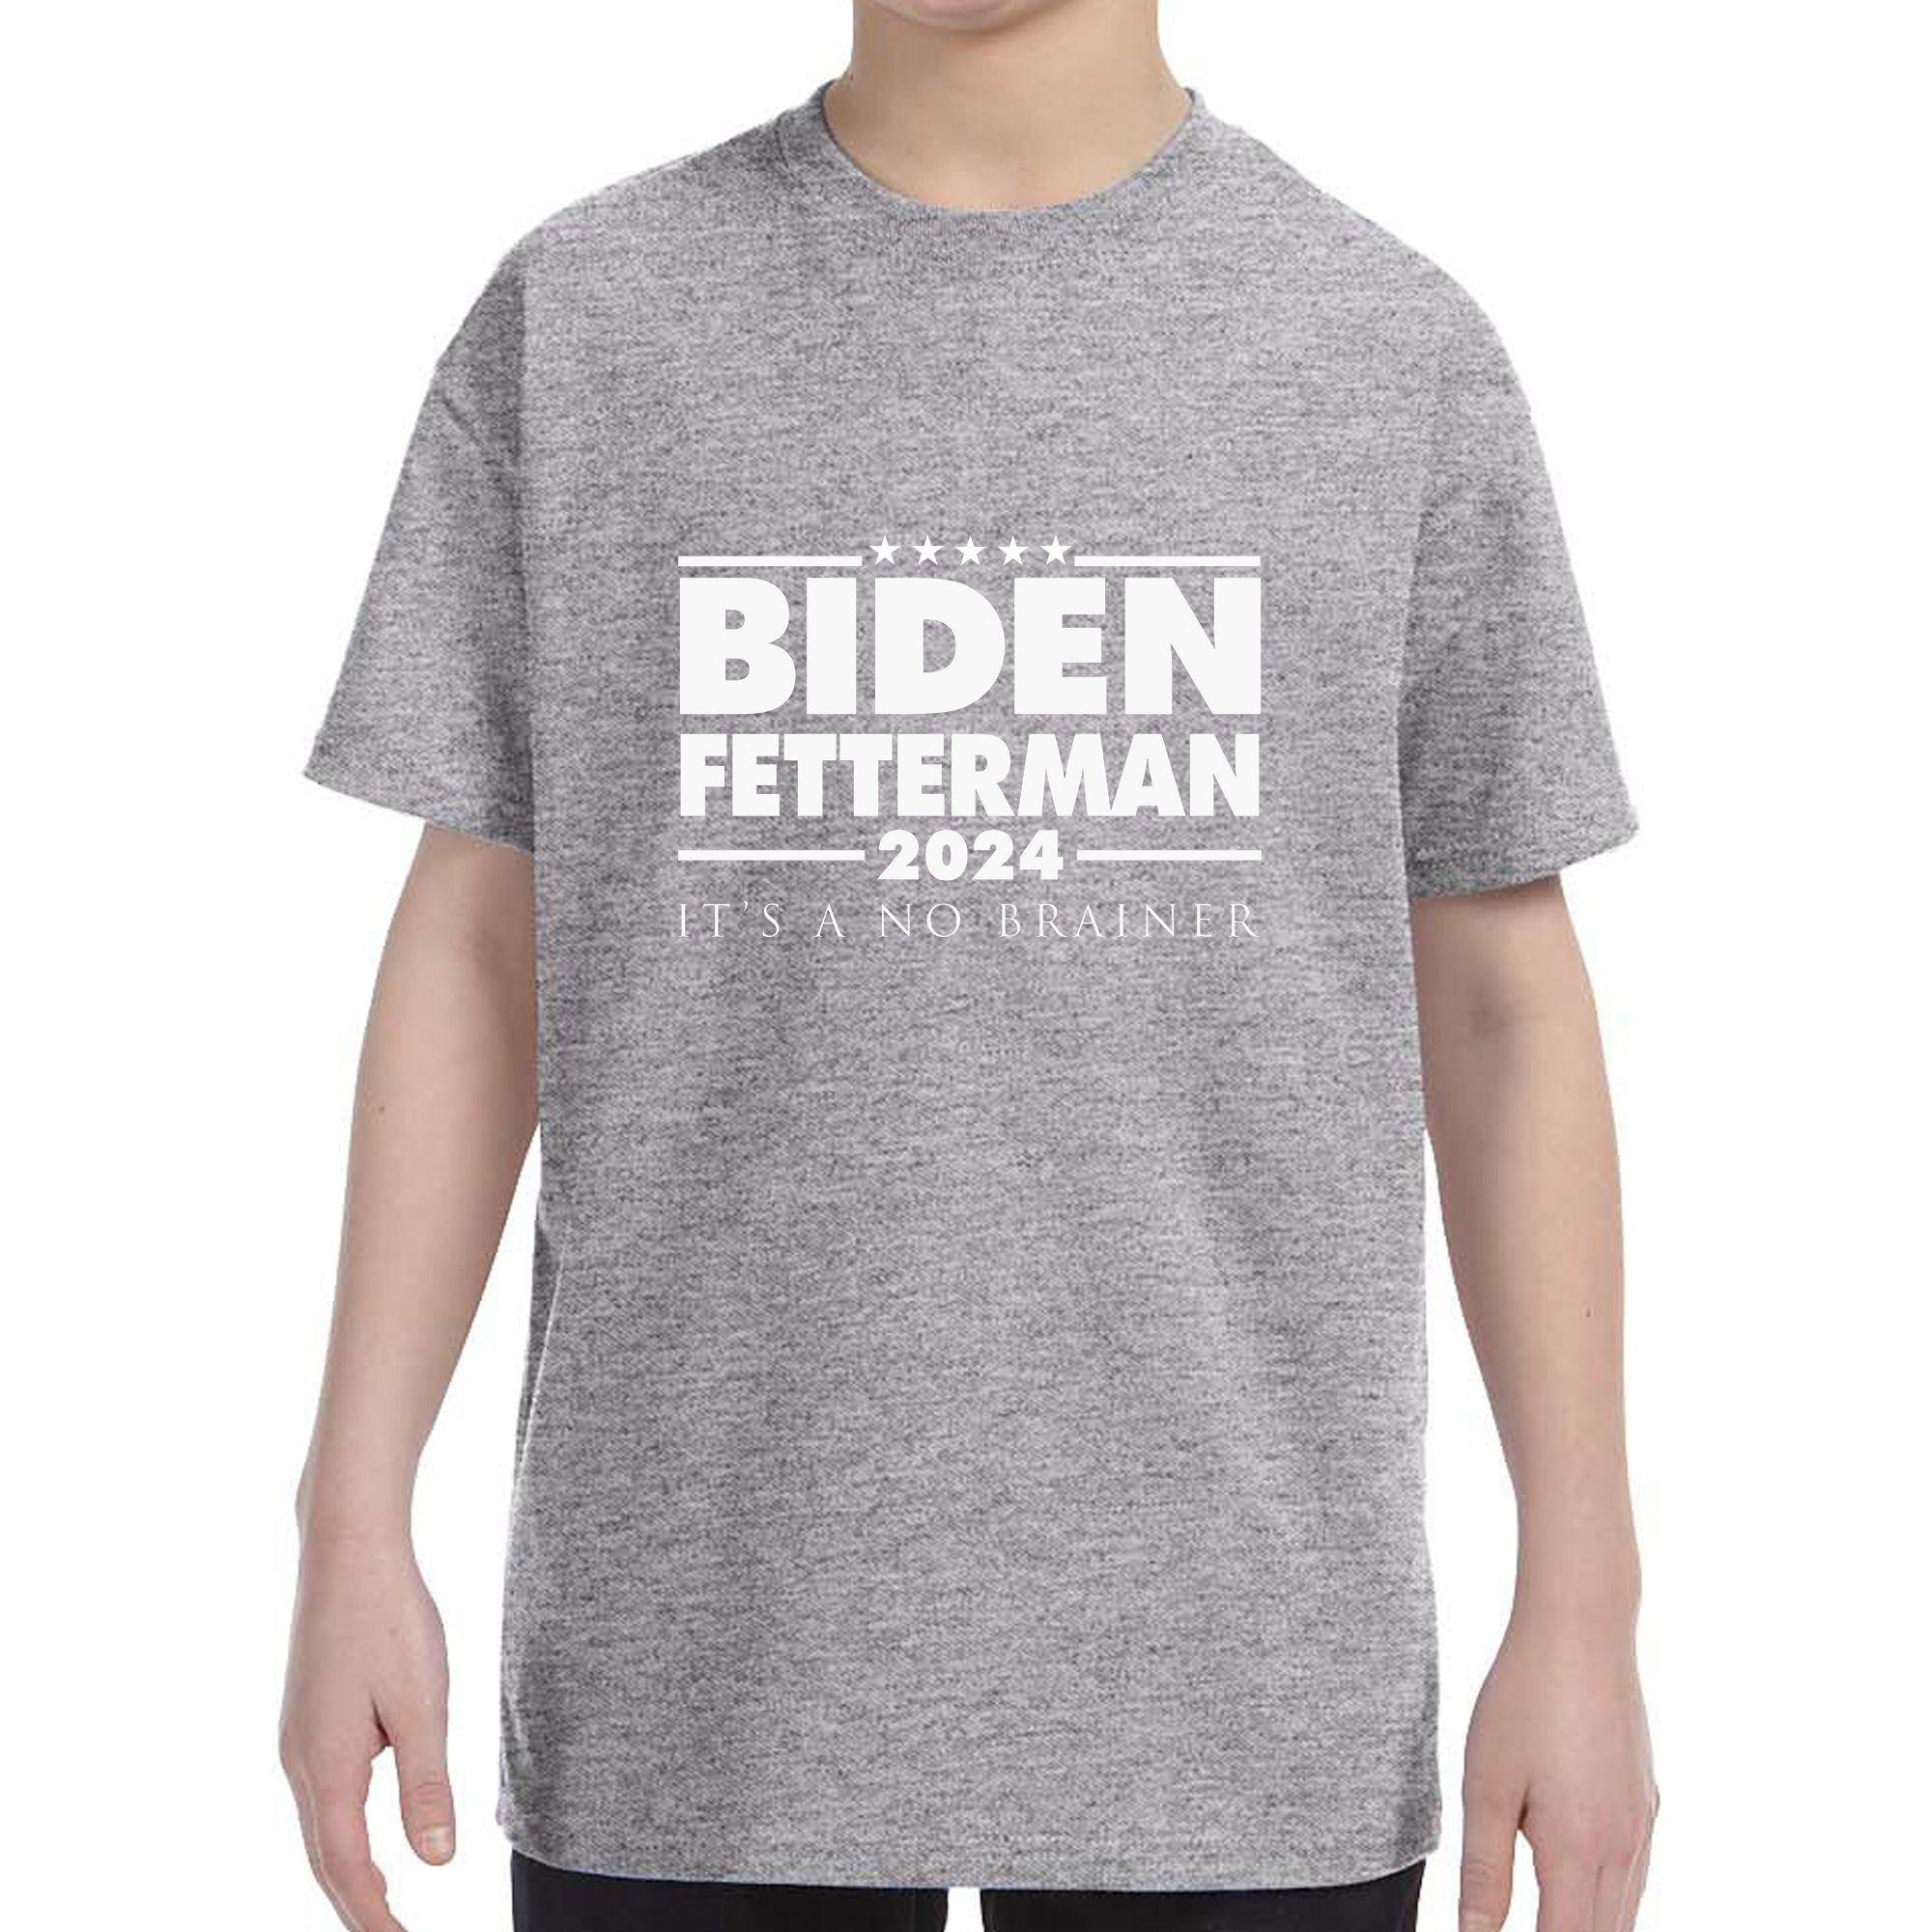 Biden Fetterman 2024 It's A No Brainer 24 Kid's T-Shirt